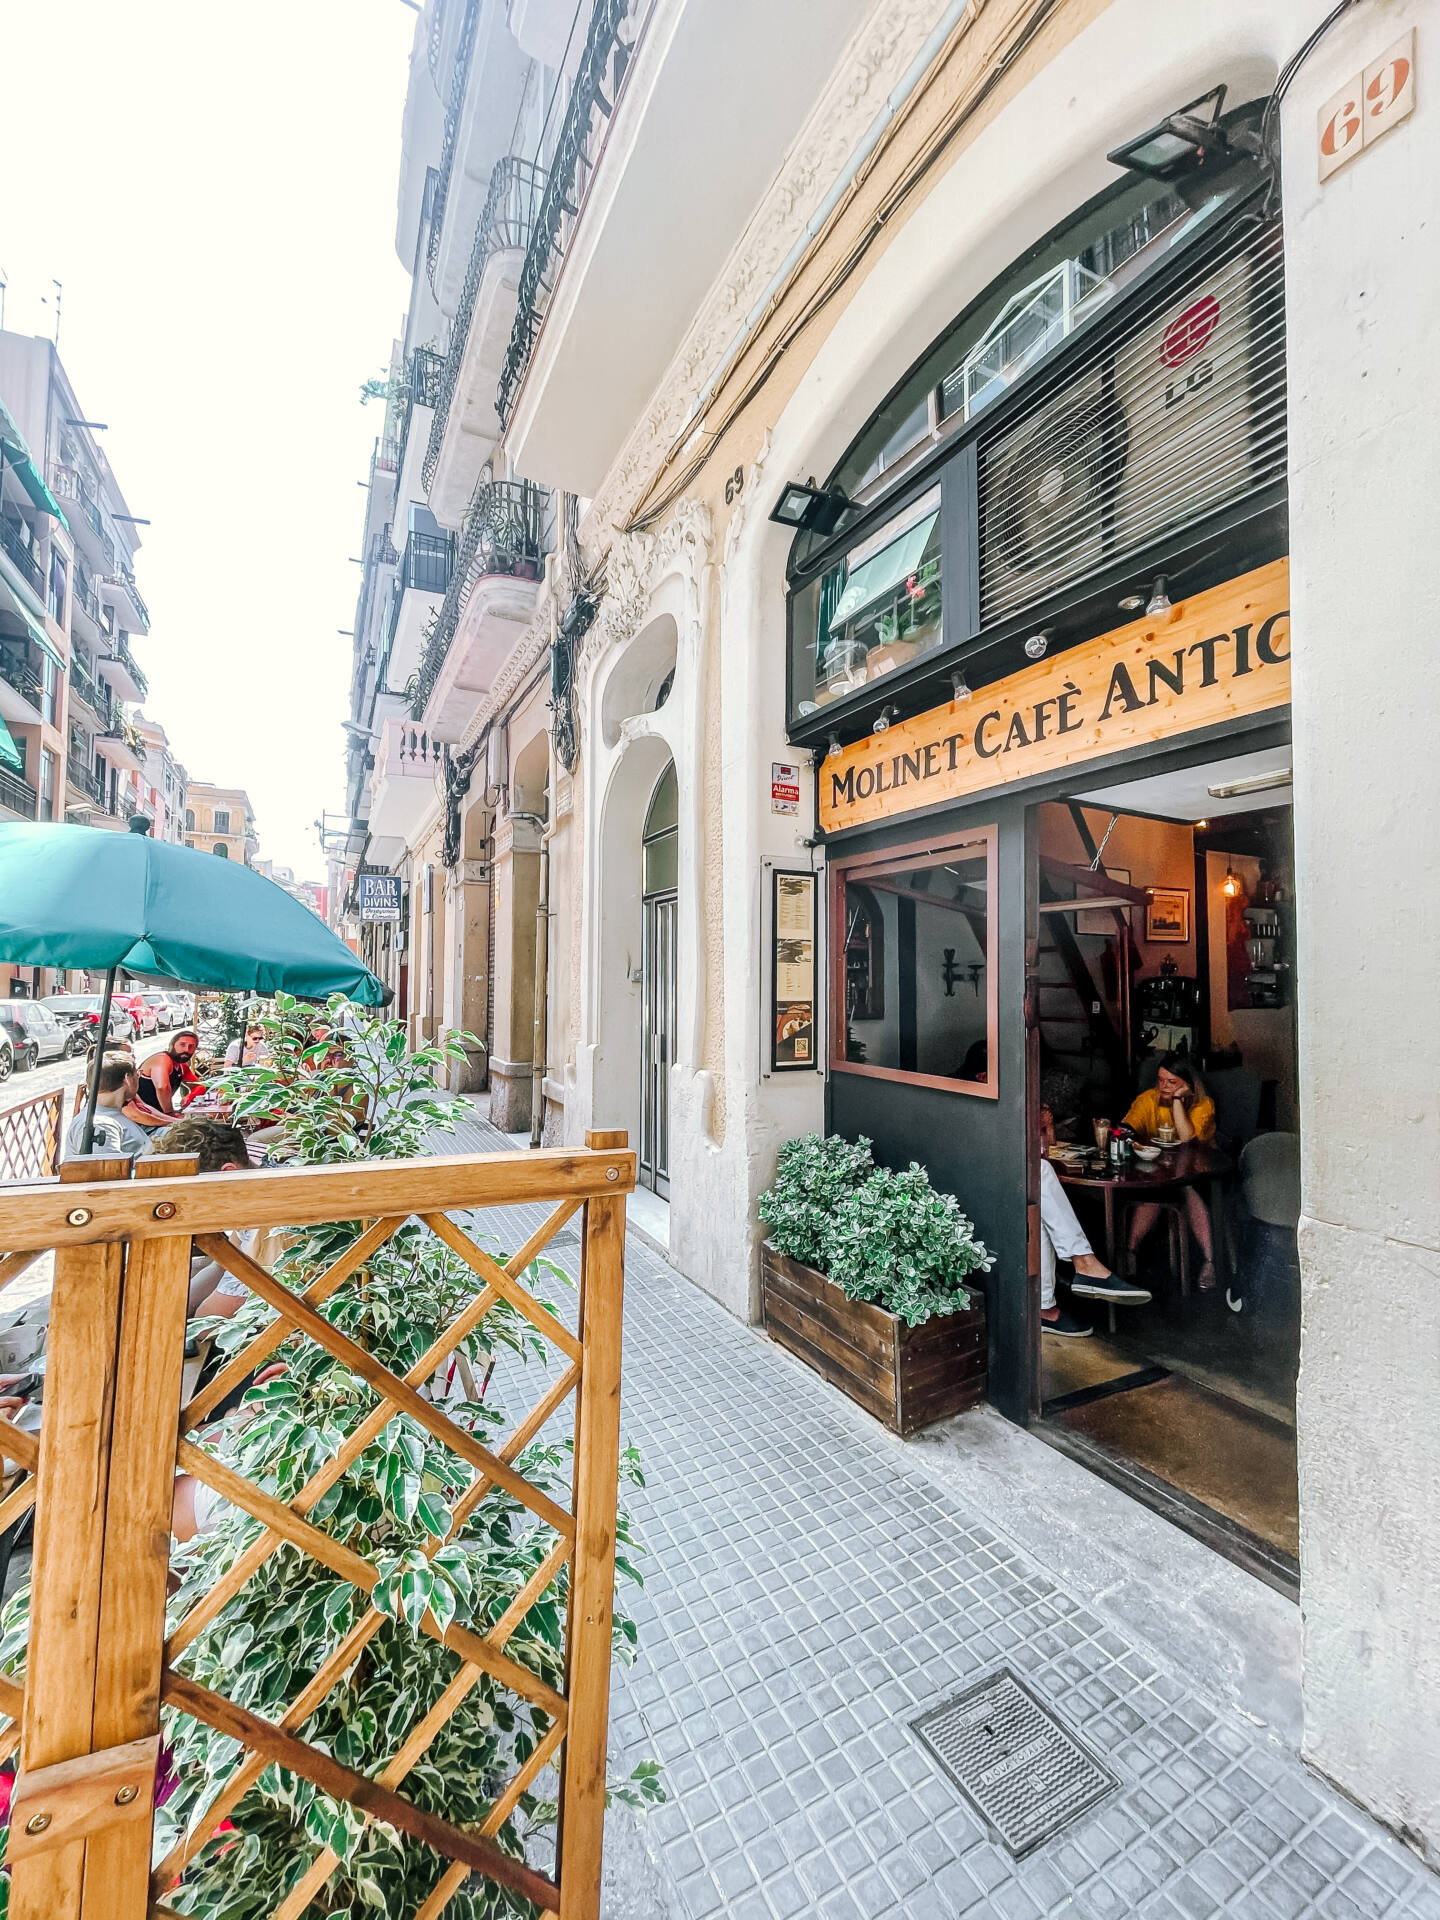 Molinet Cafe Antic Barcelona